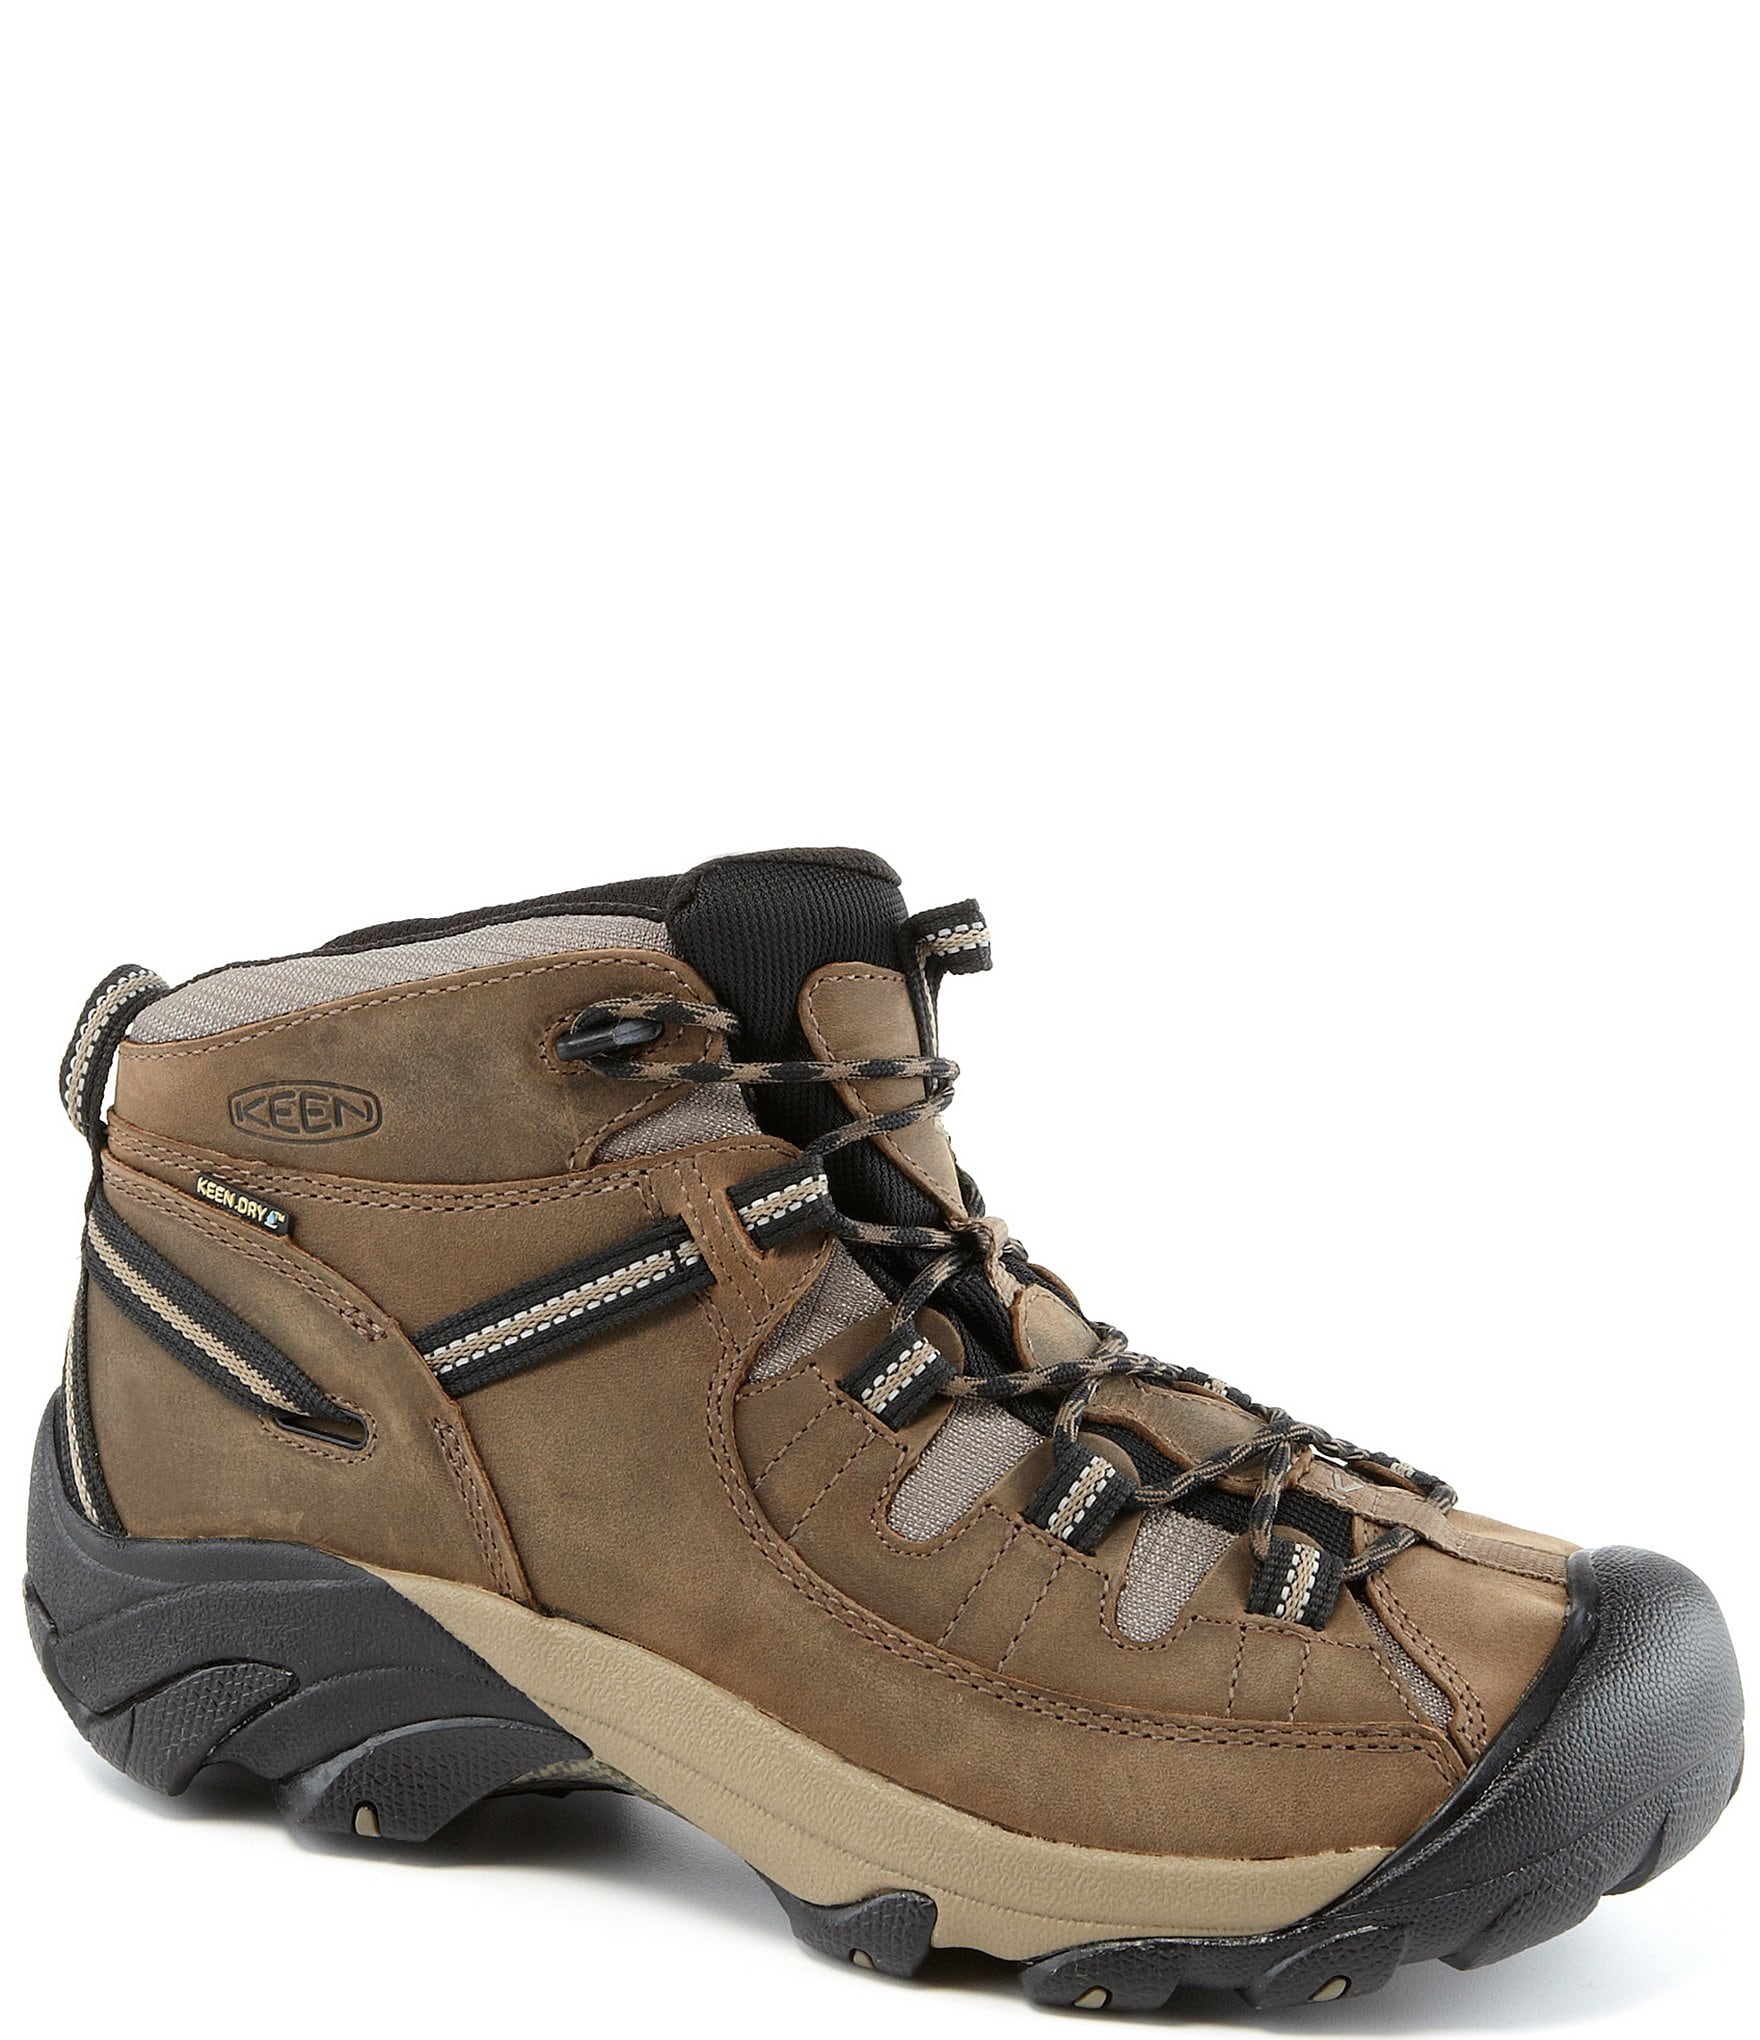 Men's Targhee II Mid Waterproof Hiking Boots | Shitake/Brindle